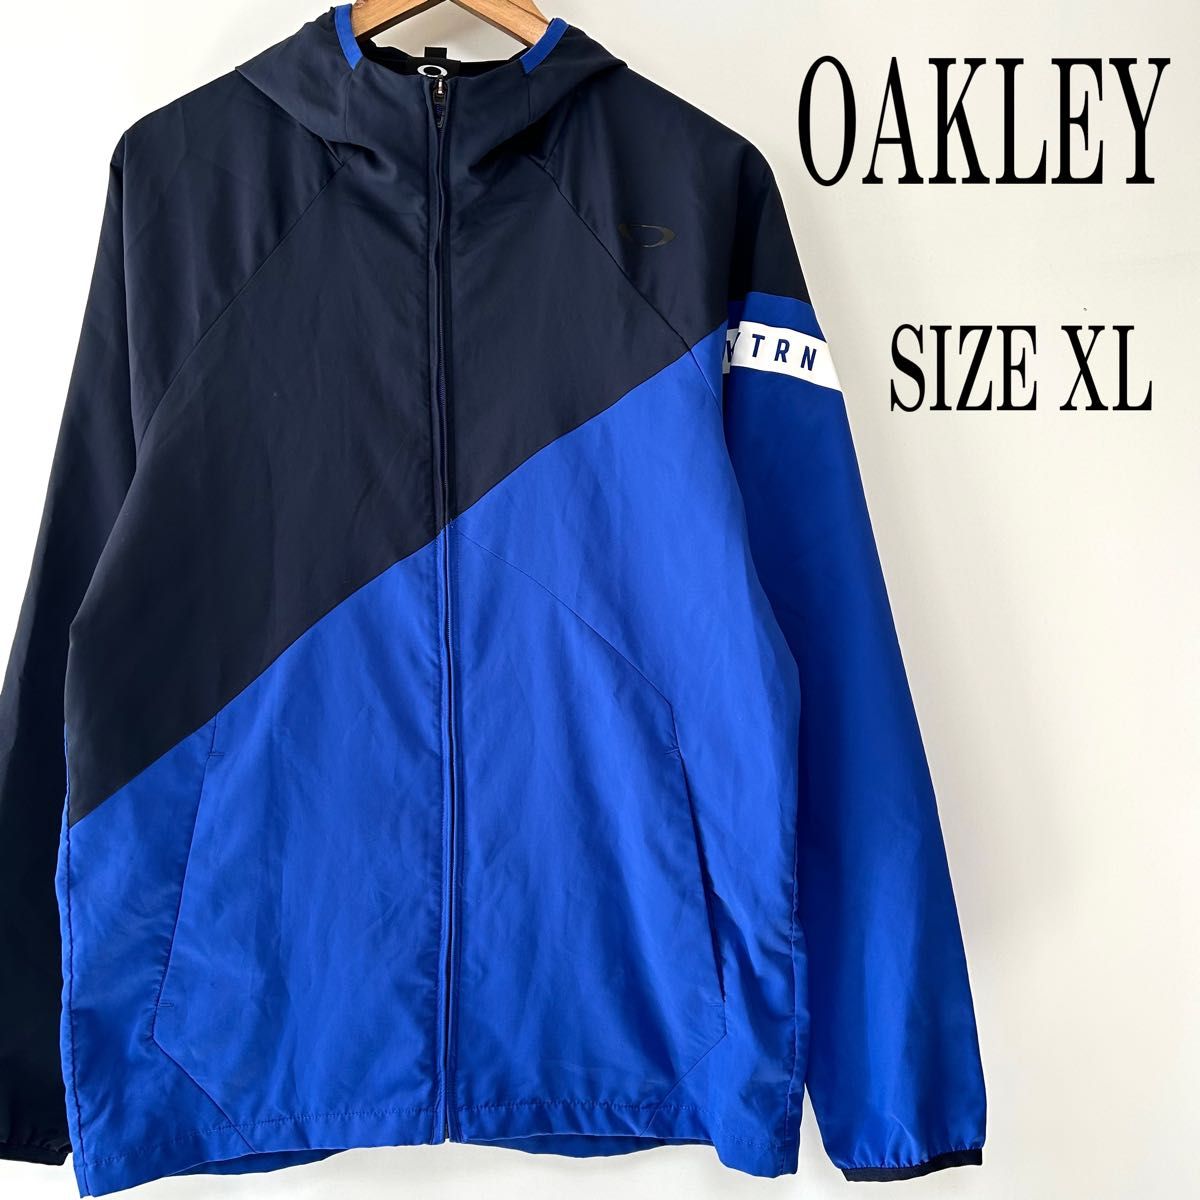 OAKLEY オークリー ワンポイントロゴ 薄手 ゴルフウェア ジップアップジャケット XL